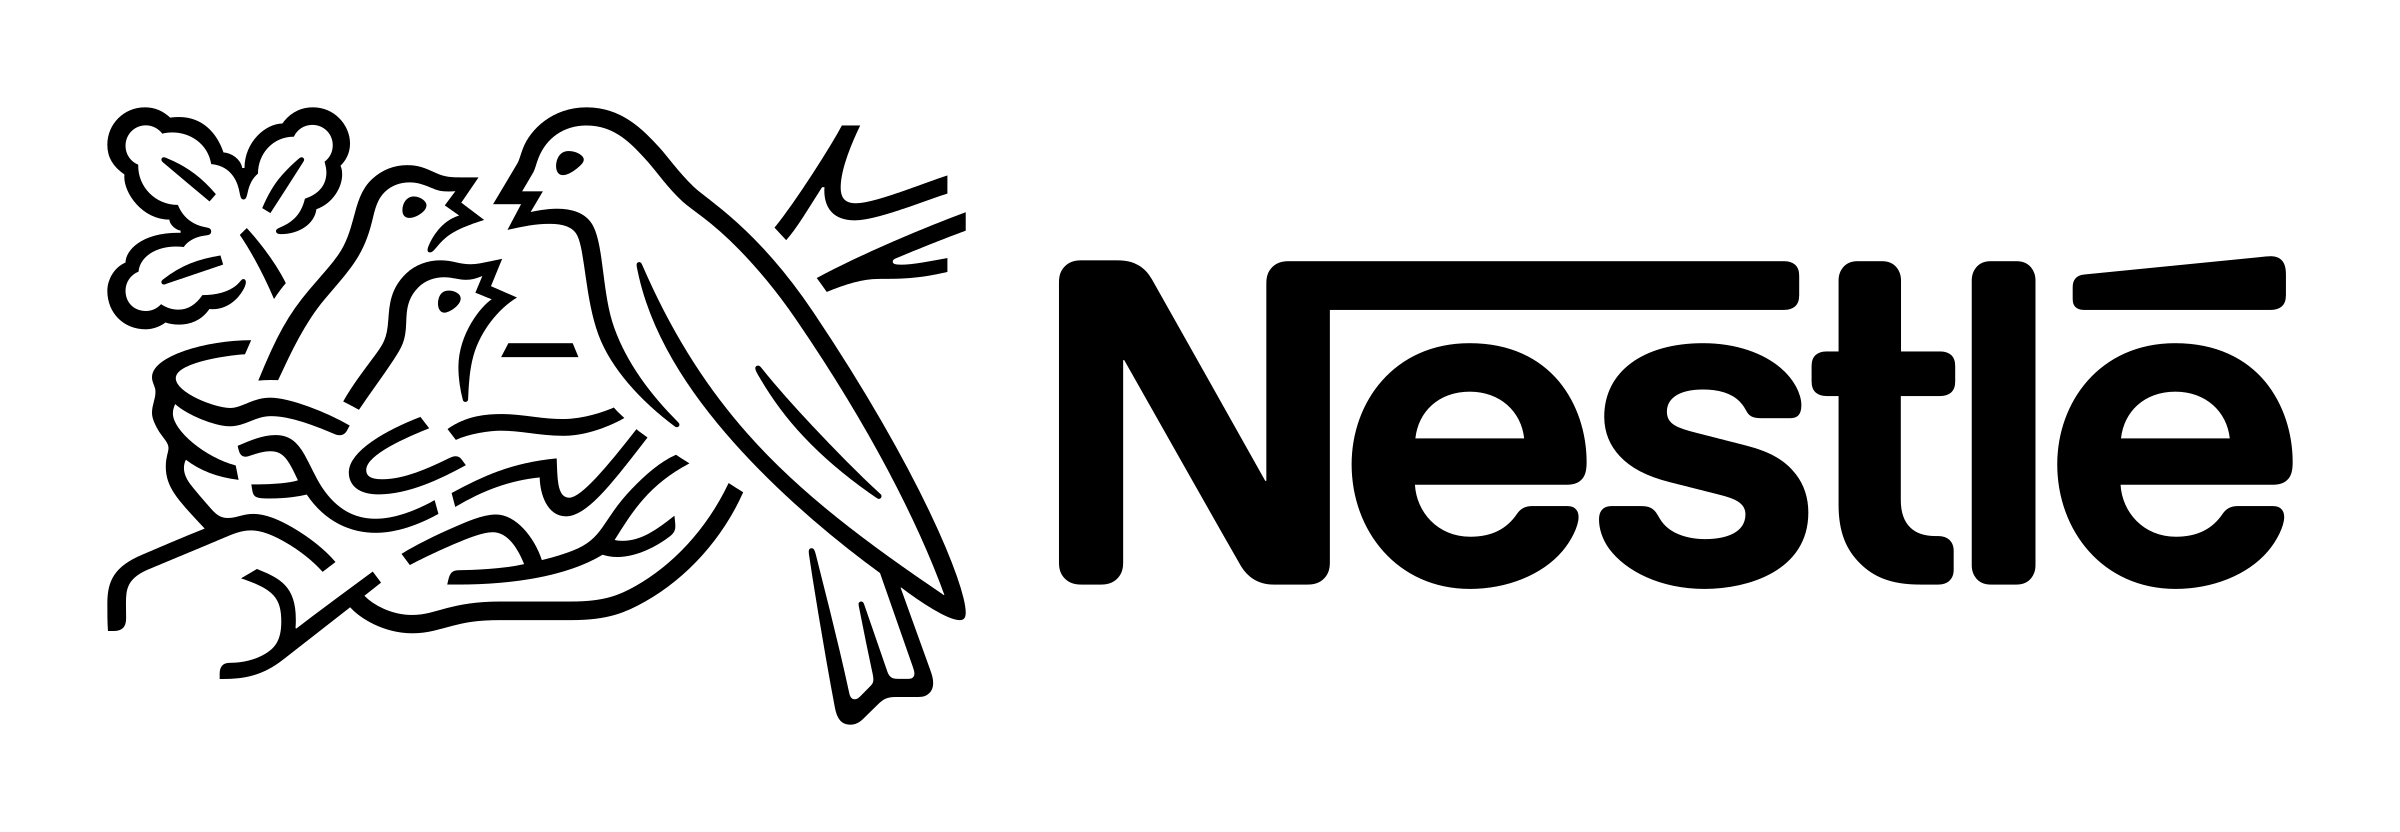 nestle logo black and white